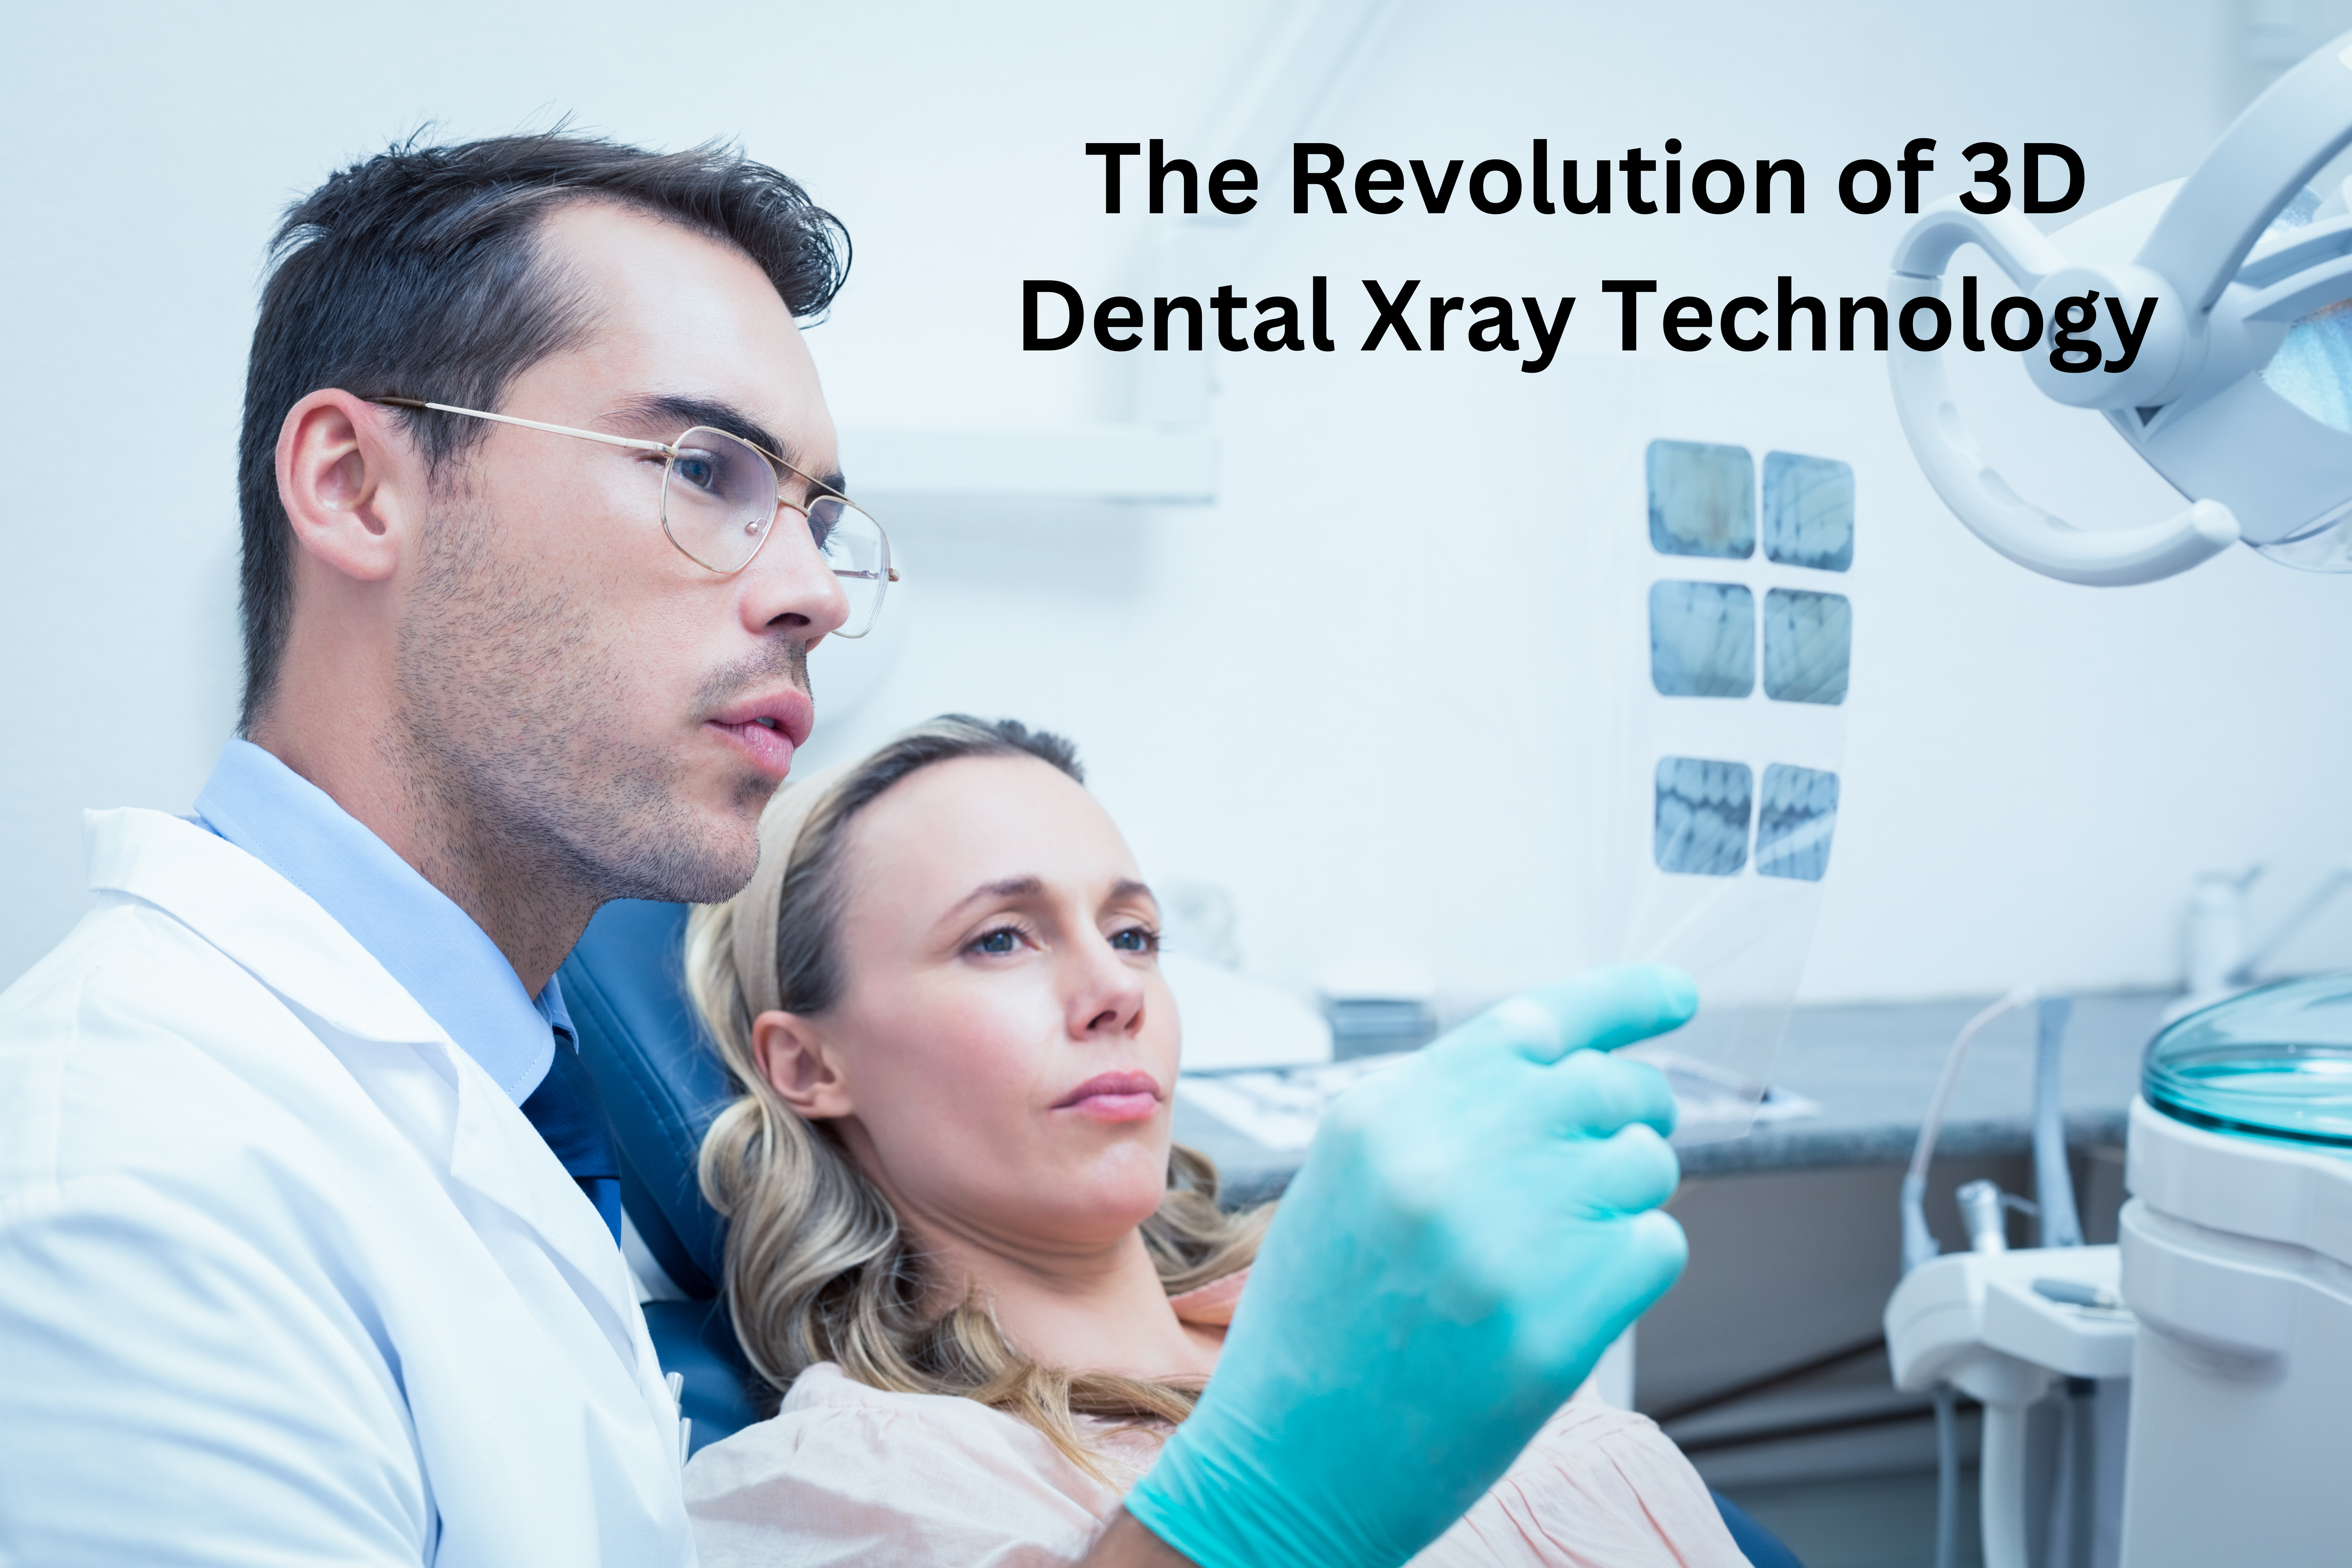 The Revolution of 3D Dental Xray Technology